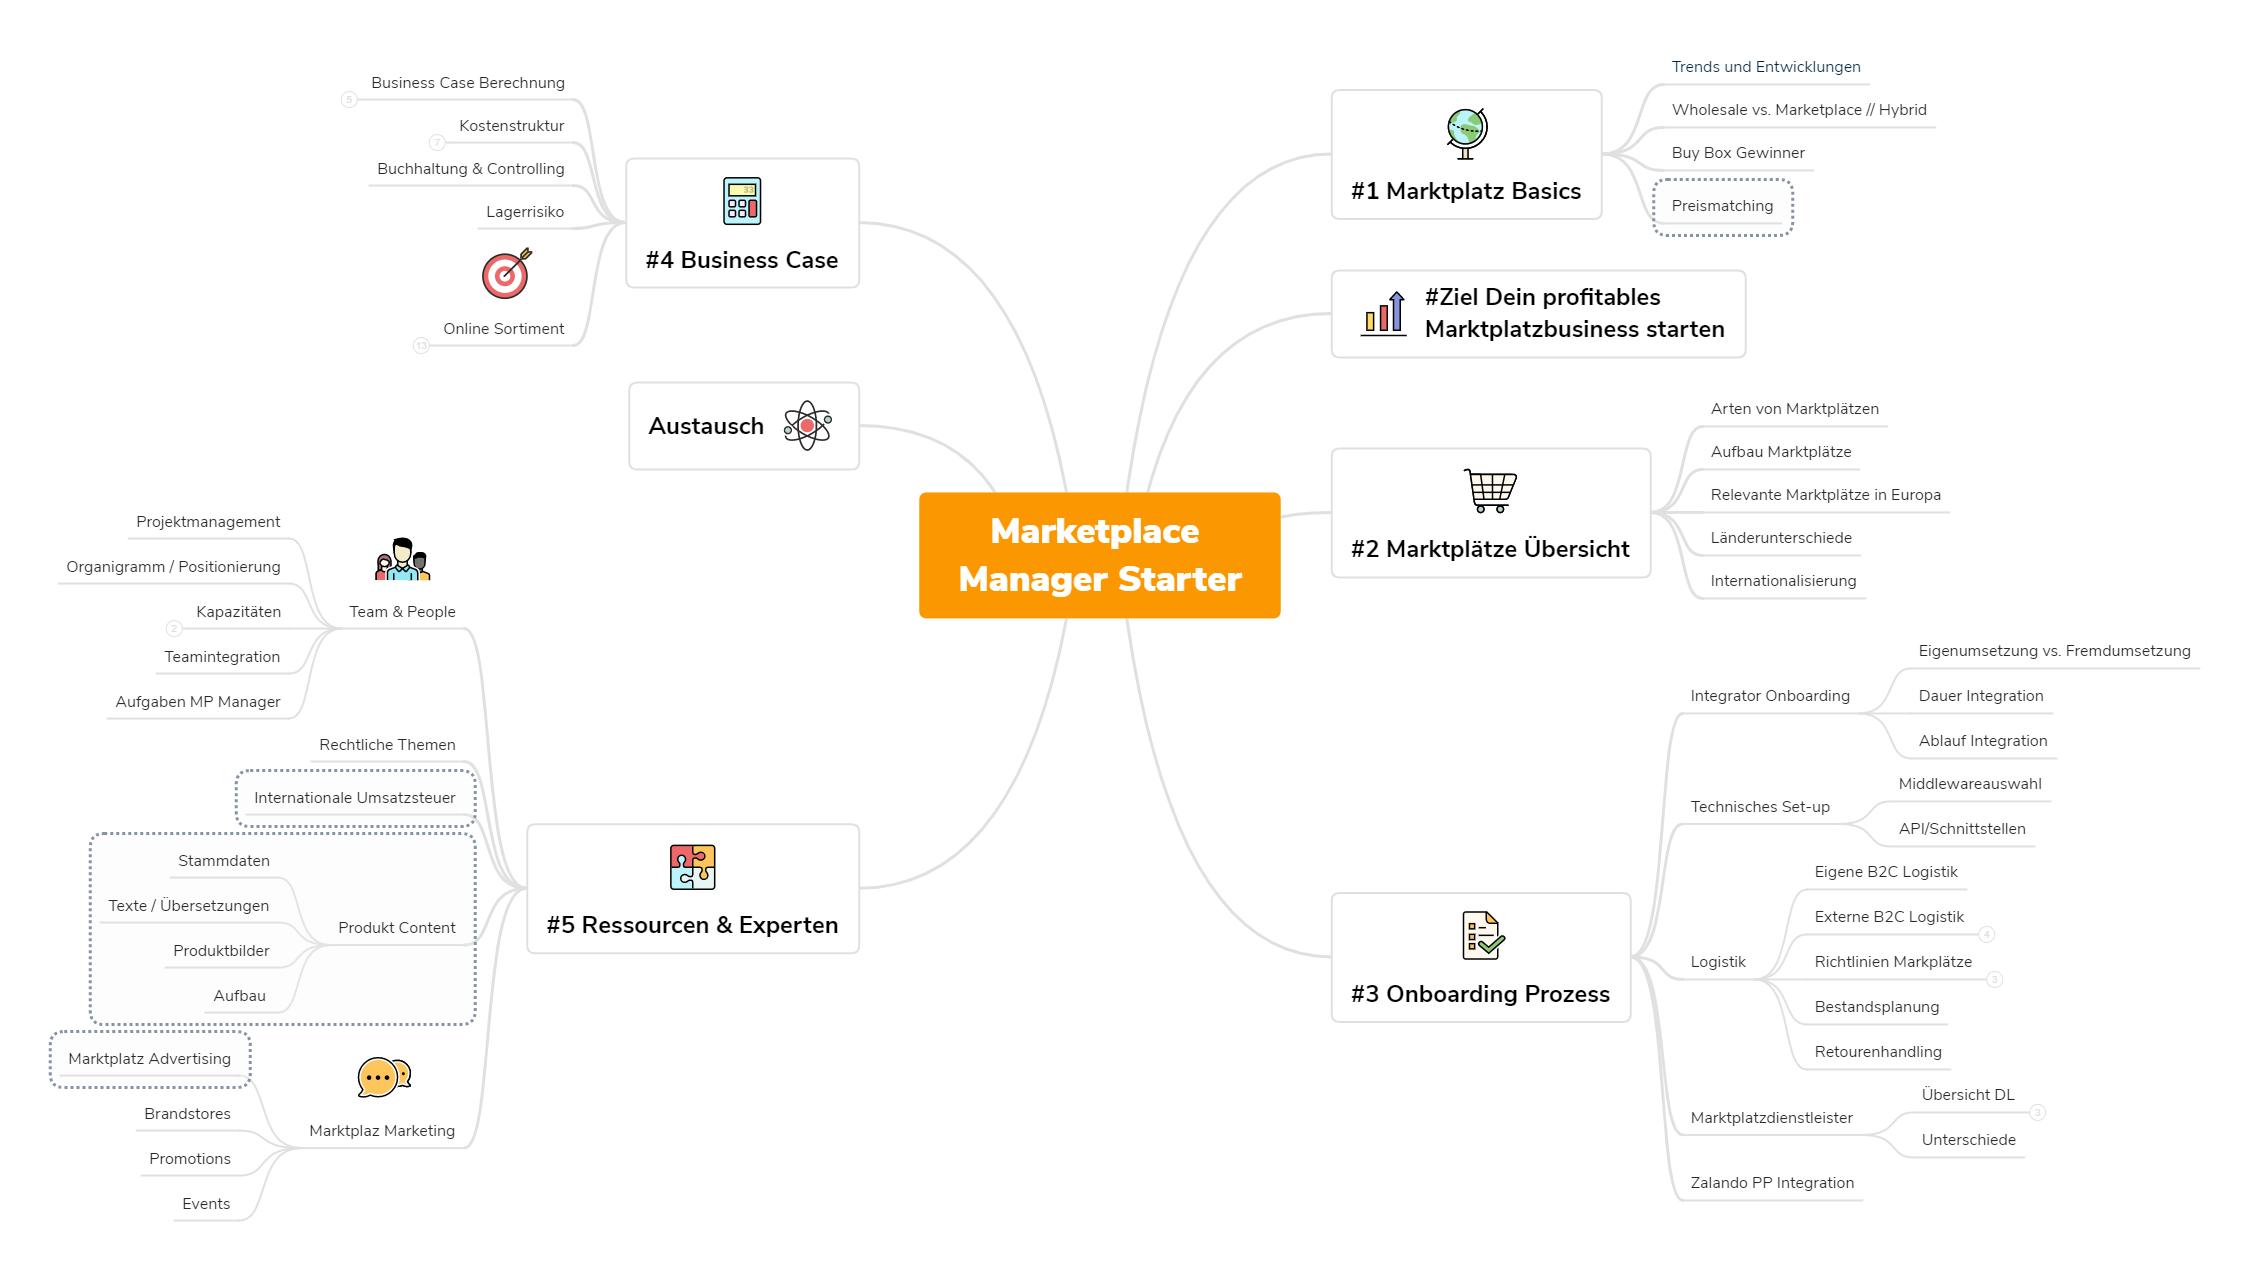 Marketplace Manager Starter Kompetenzfelder